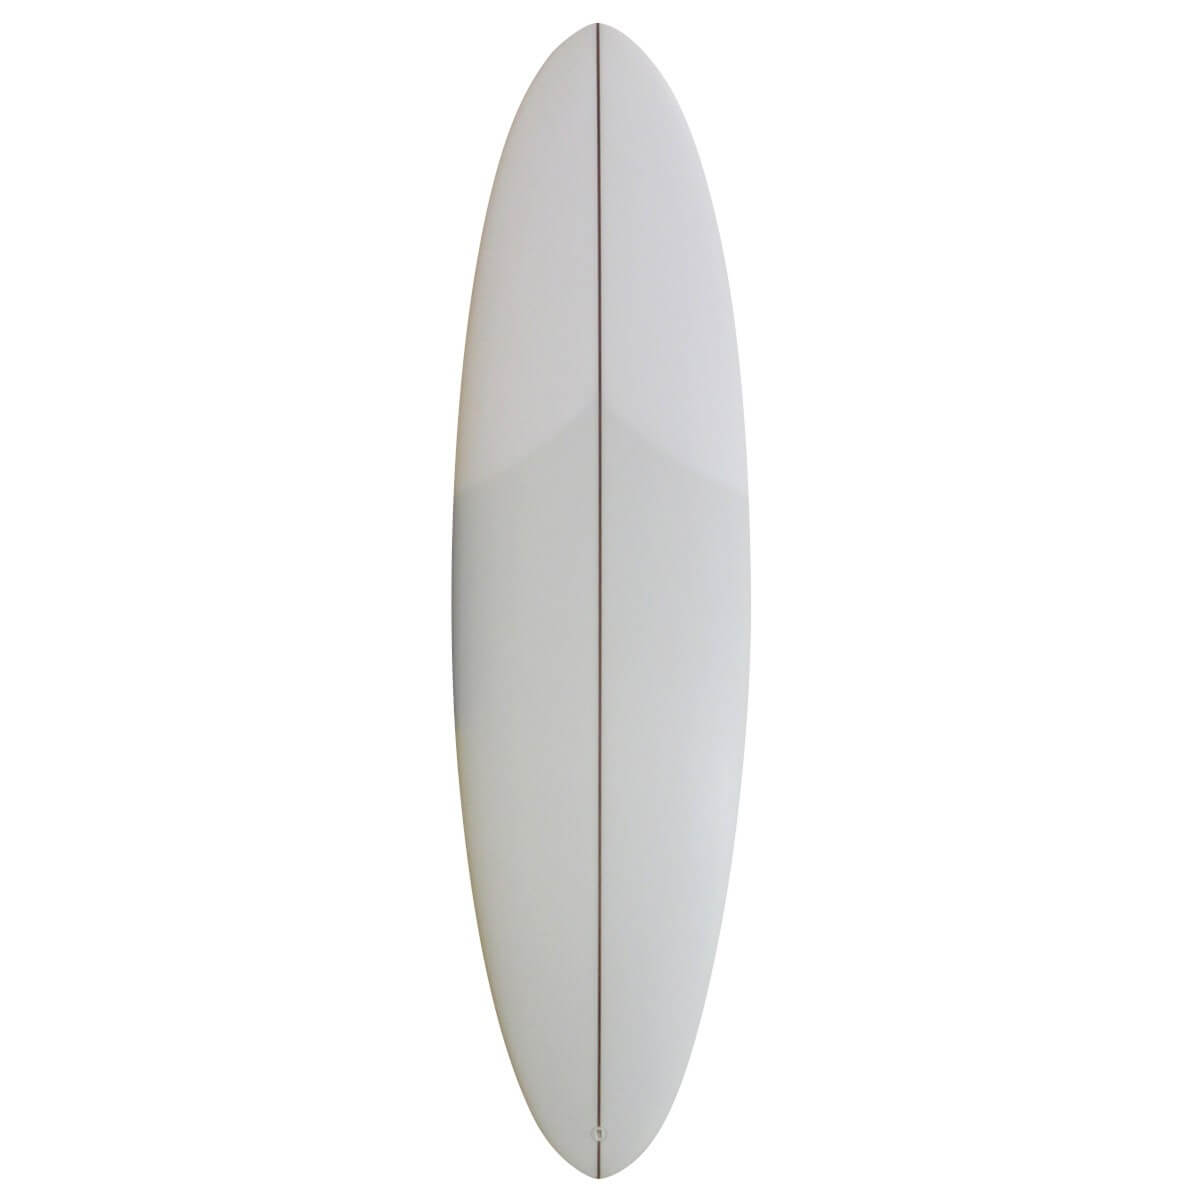 Gary Hanel Surfboards : EGG TWIN 6`6